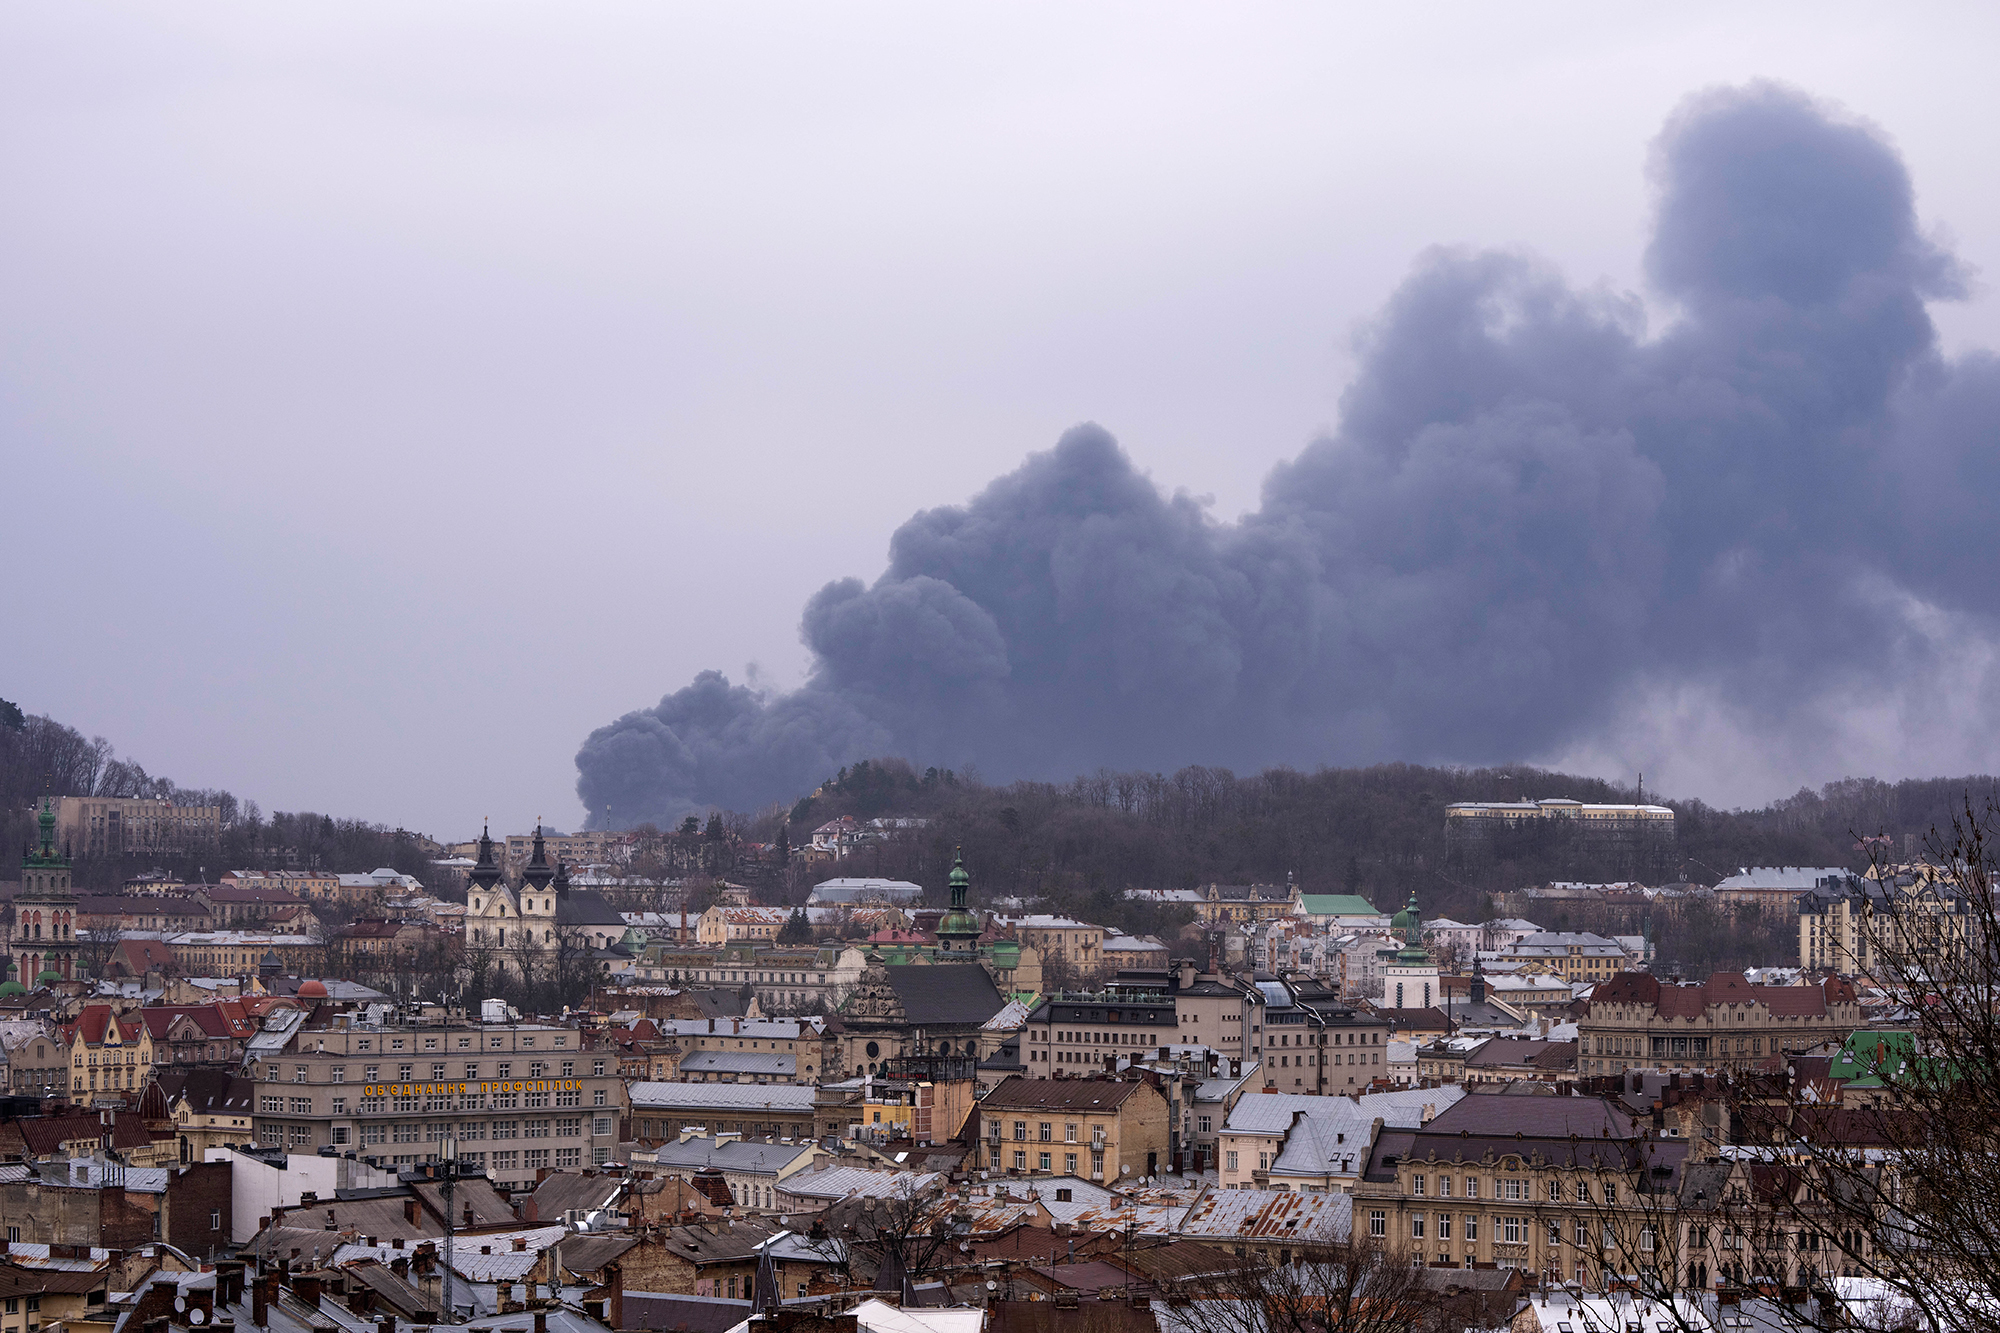 Pasukan Rusia melakukan serangan di dekat kota Lviv di Ukraina barat, menurut seorang pejabat regional